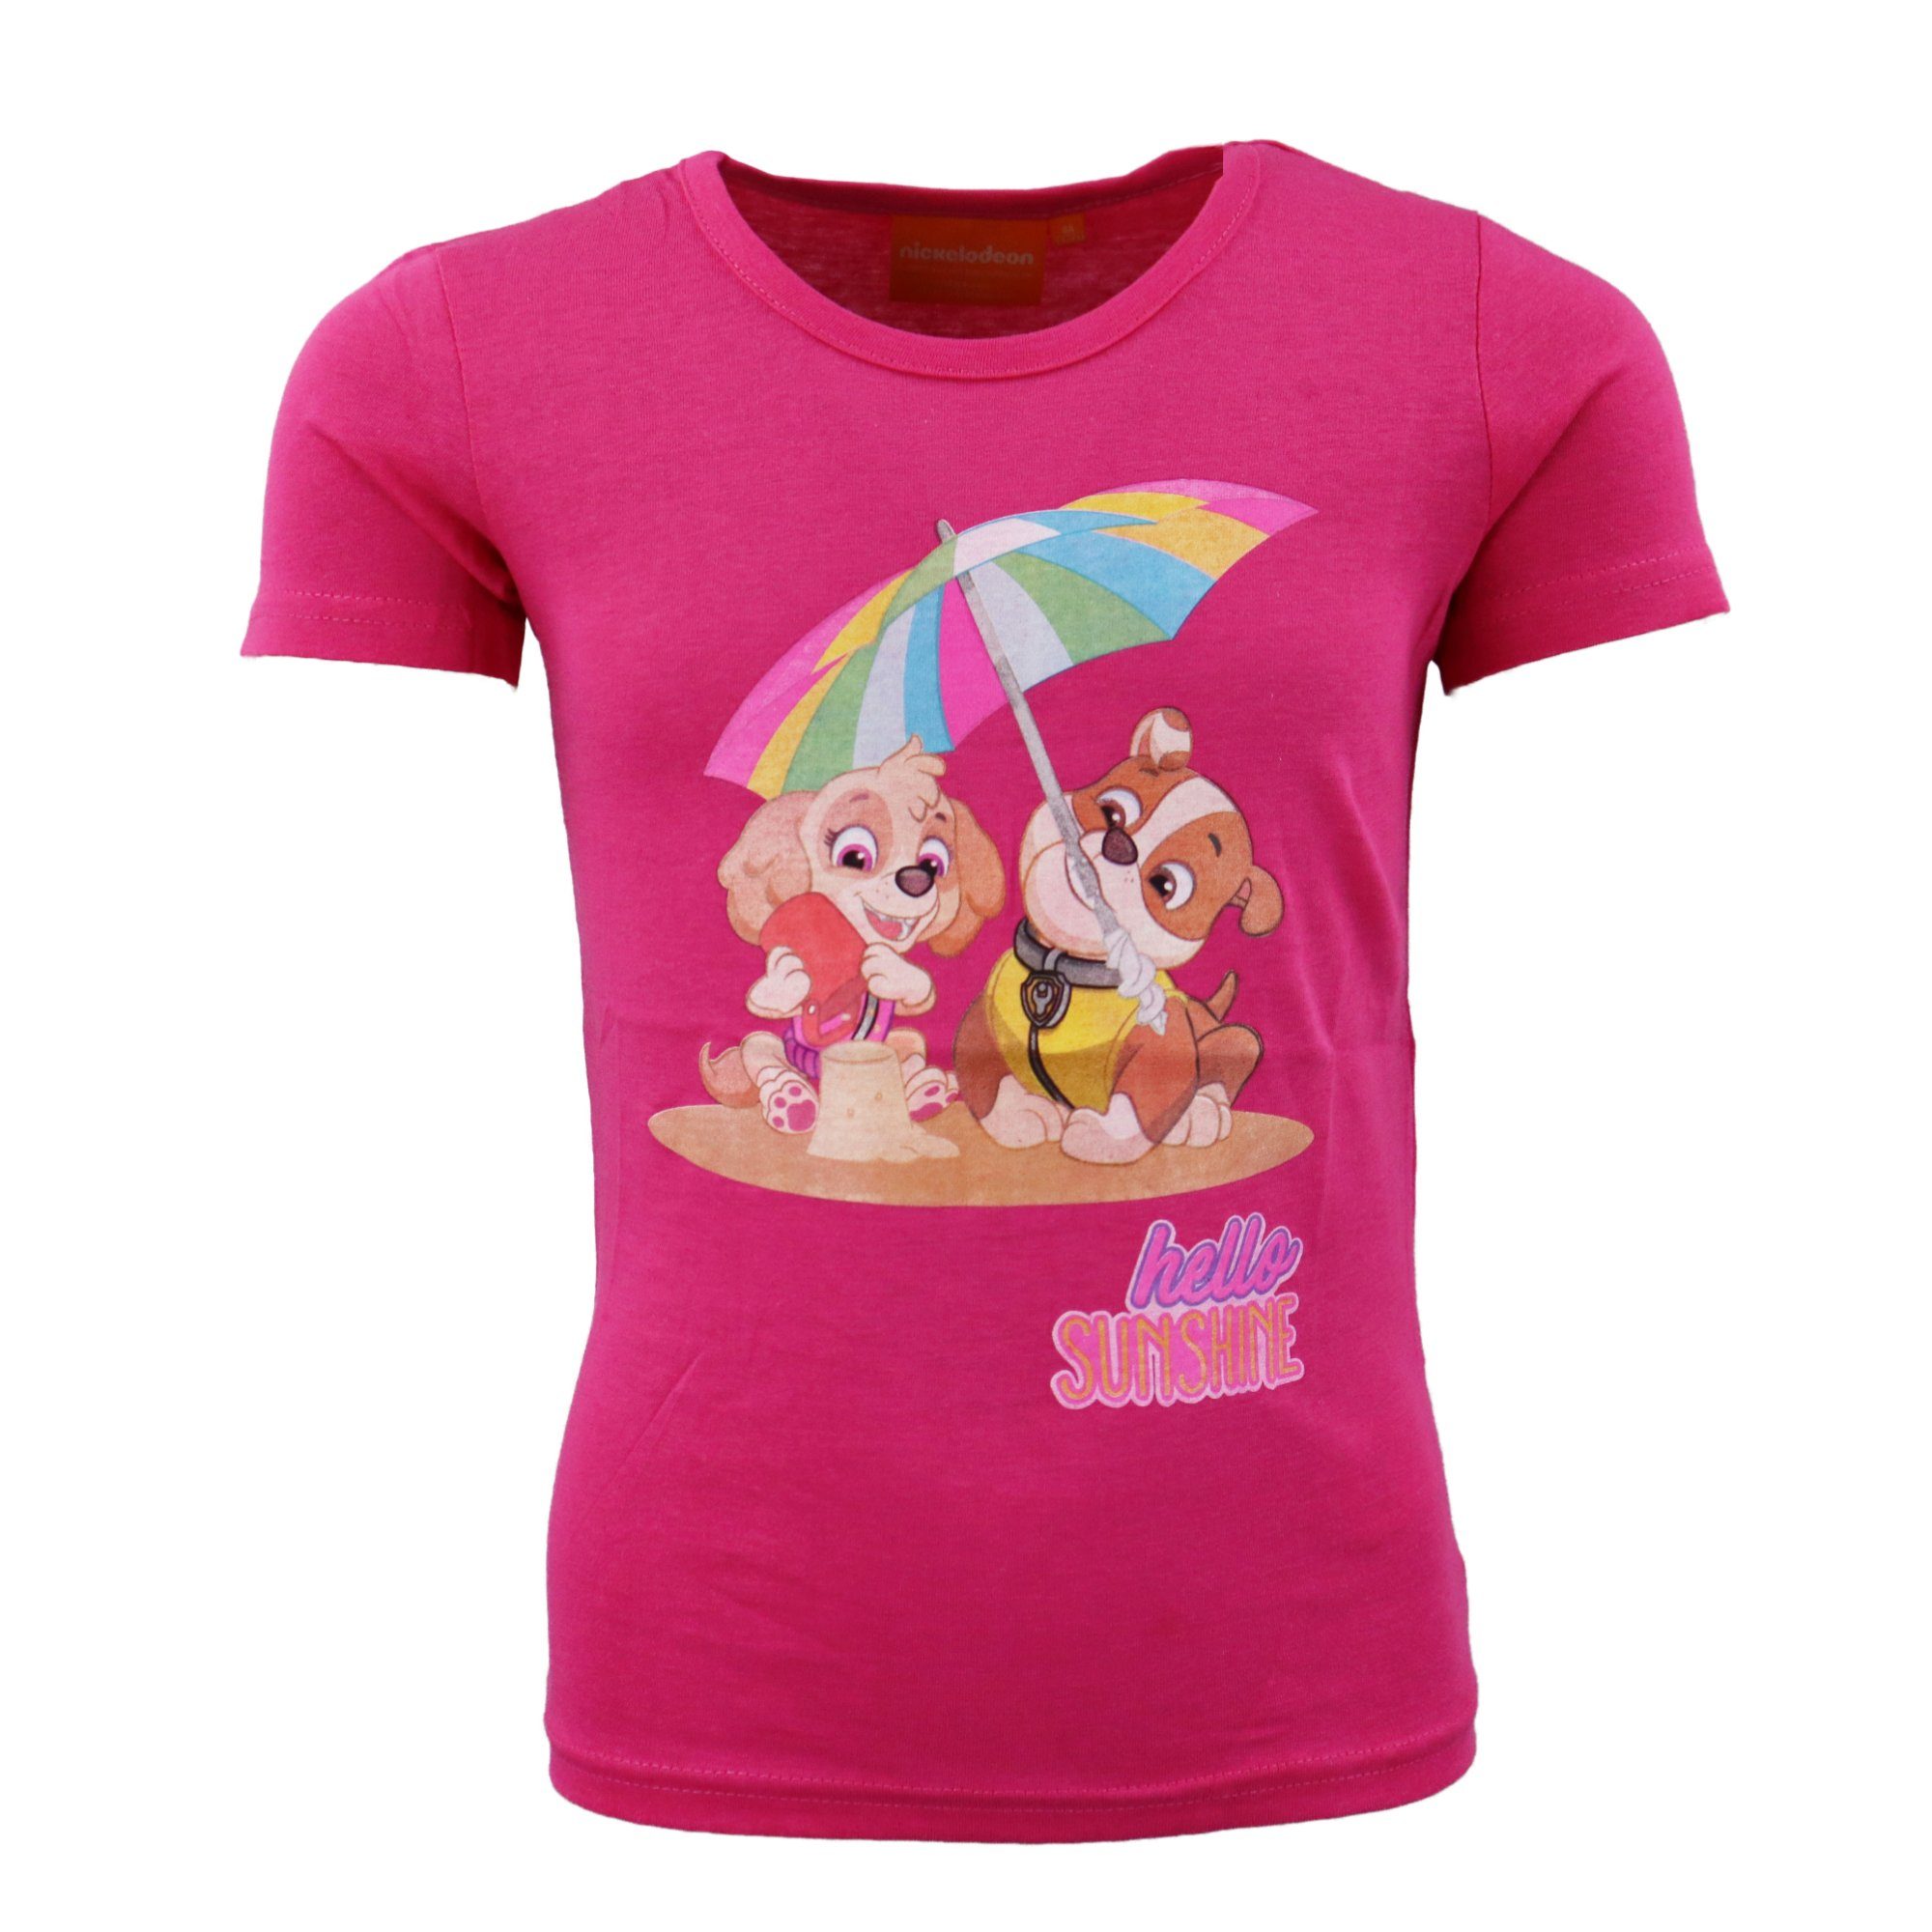 98 100% Skye Paw Marshall Print-Shirt Patrol PATROL Pink Kinder bis Gr. 128, Baumwolle T-Shirt PAW